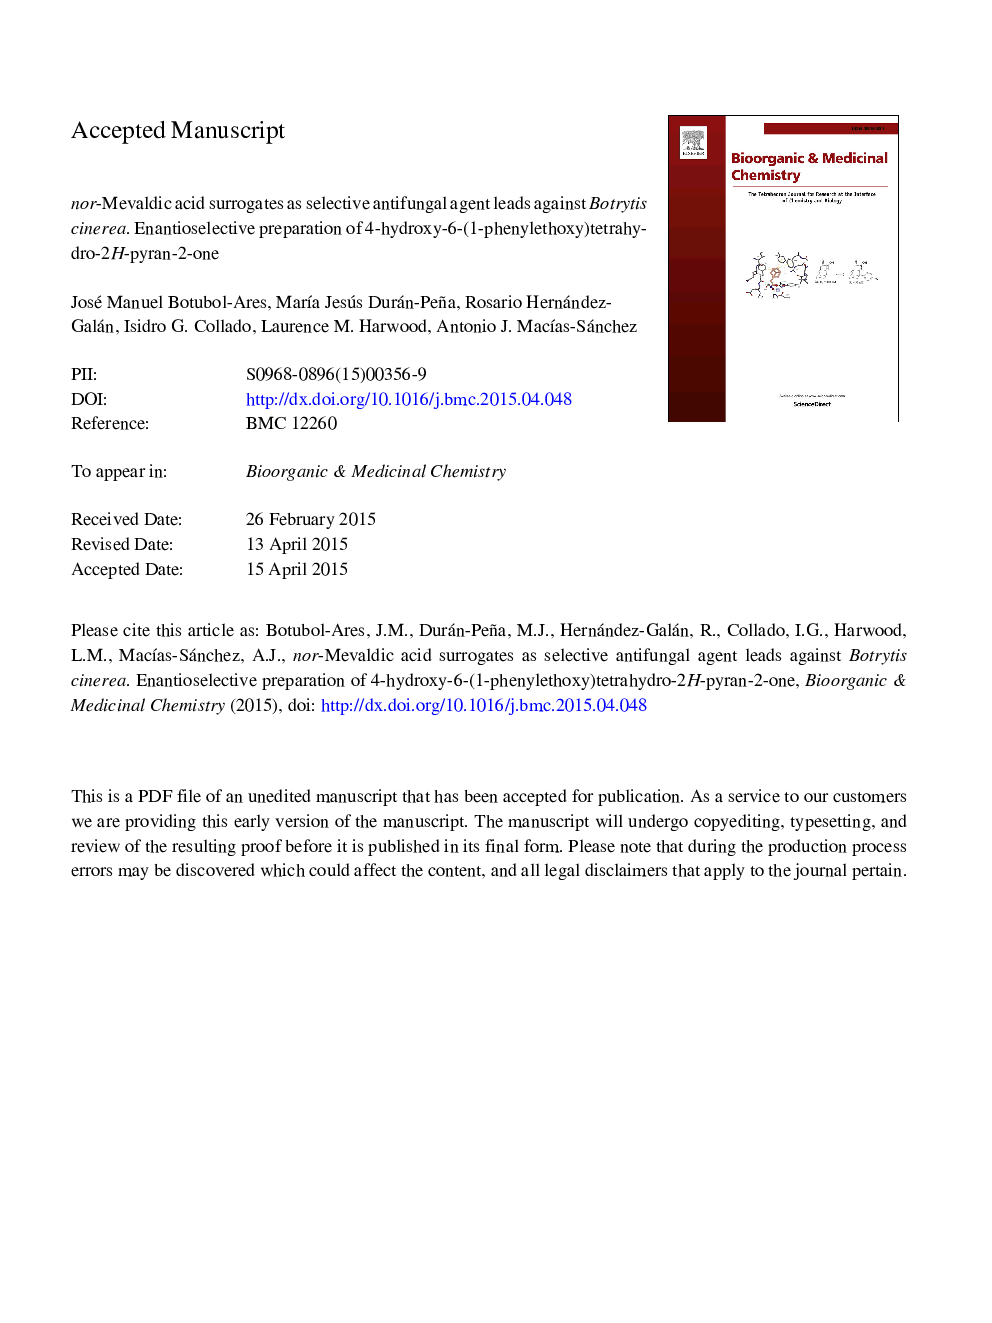 nor-Mevaldic acid surrogates as selective antifungal agent leads against Botrytis cinerea. Enantioselective preparation of 4-hydroxy-6-(1-phenylethoxy)tetrahydro-2H-pyran-2-one